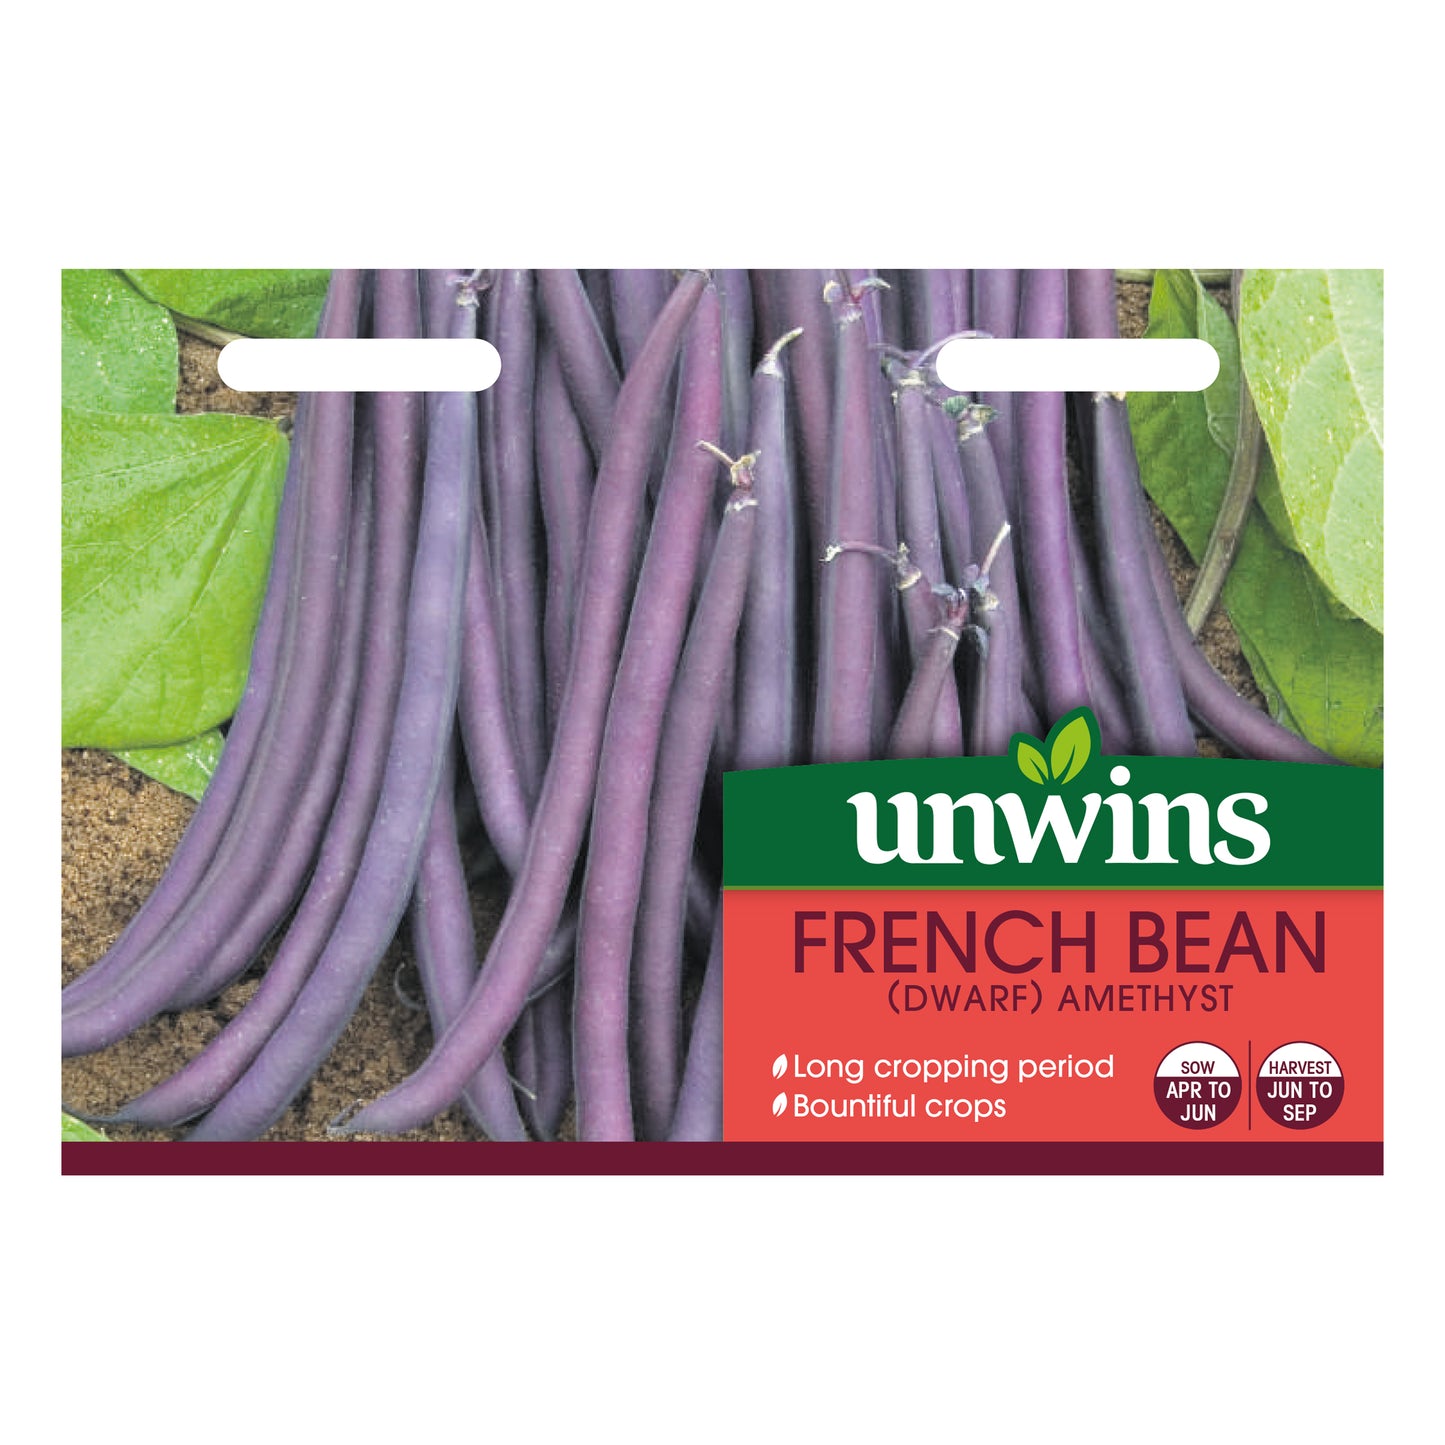 Unwins Dwarf French Bean Amethyst Seeds front